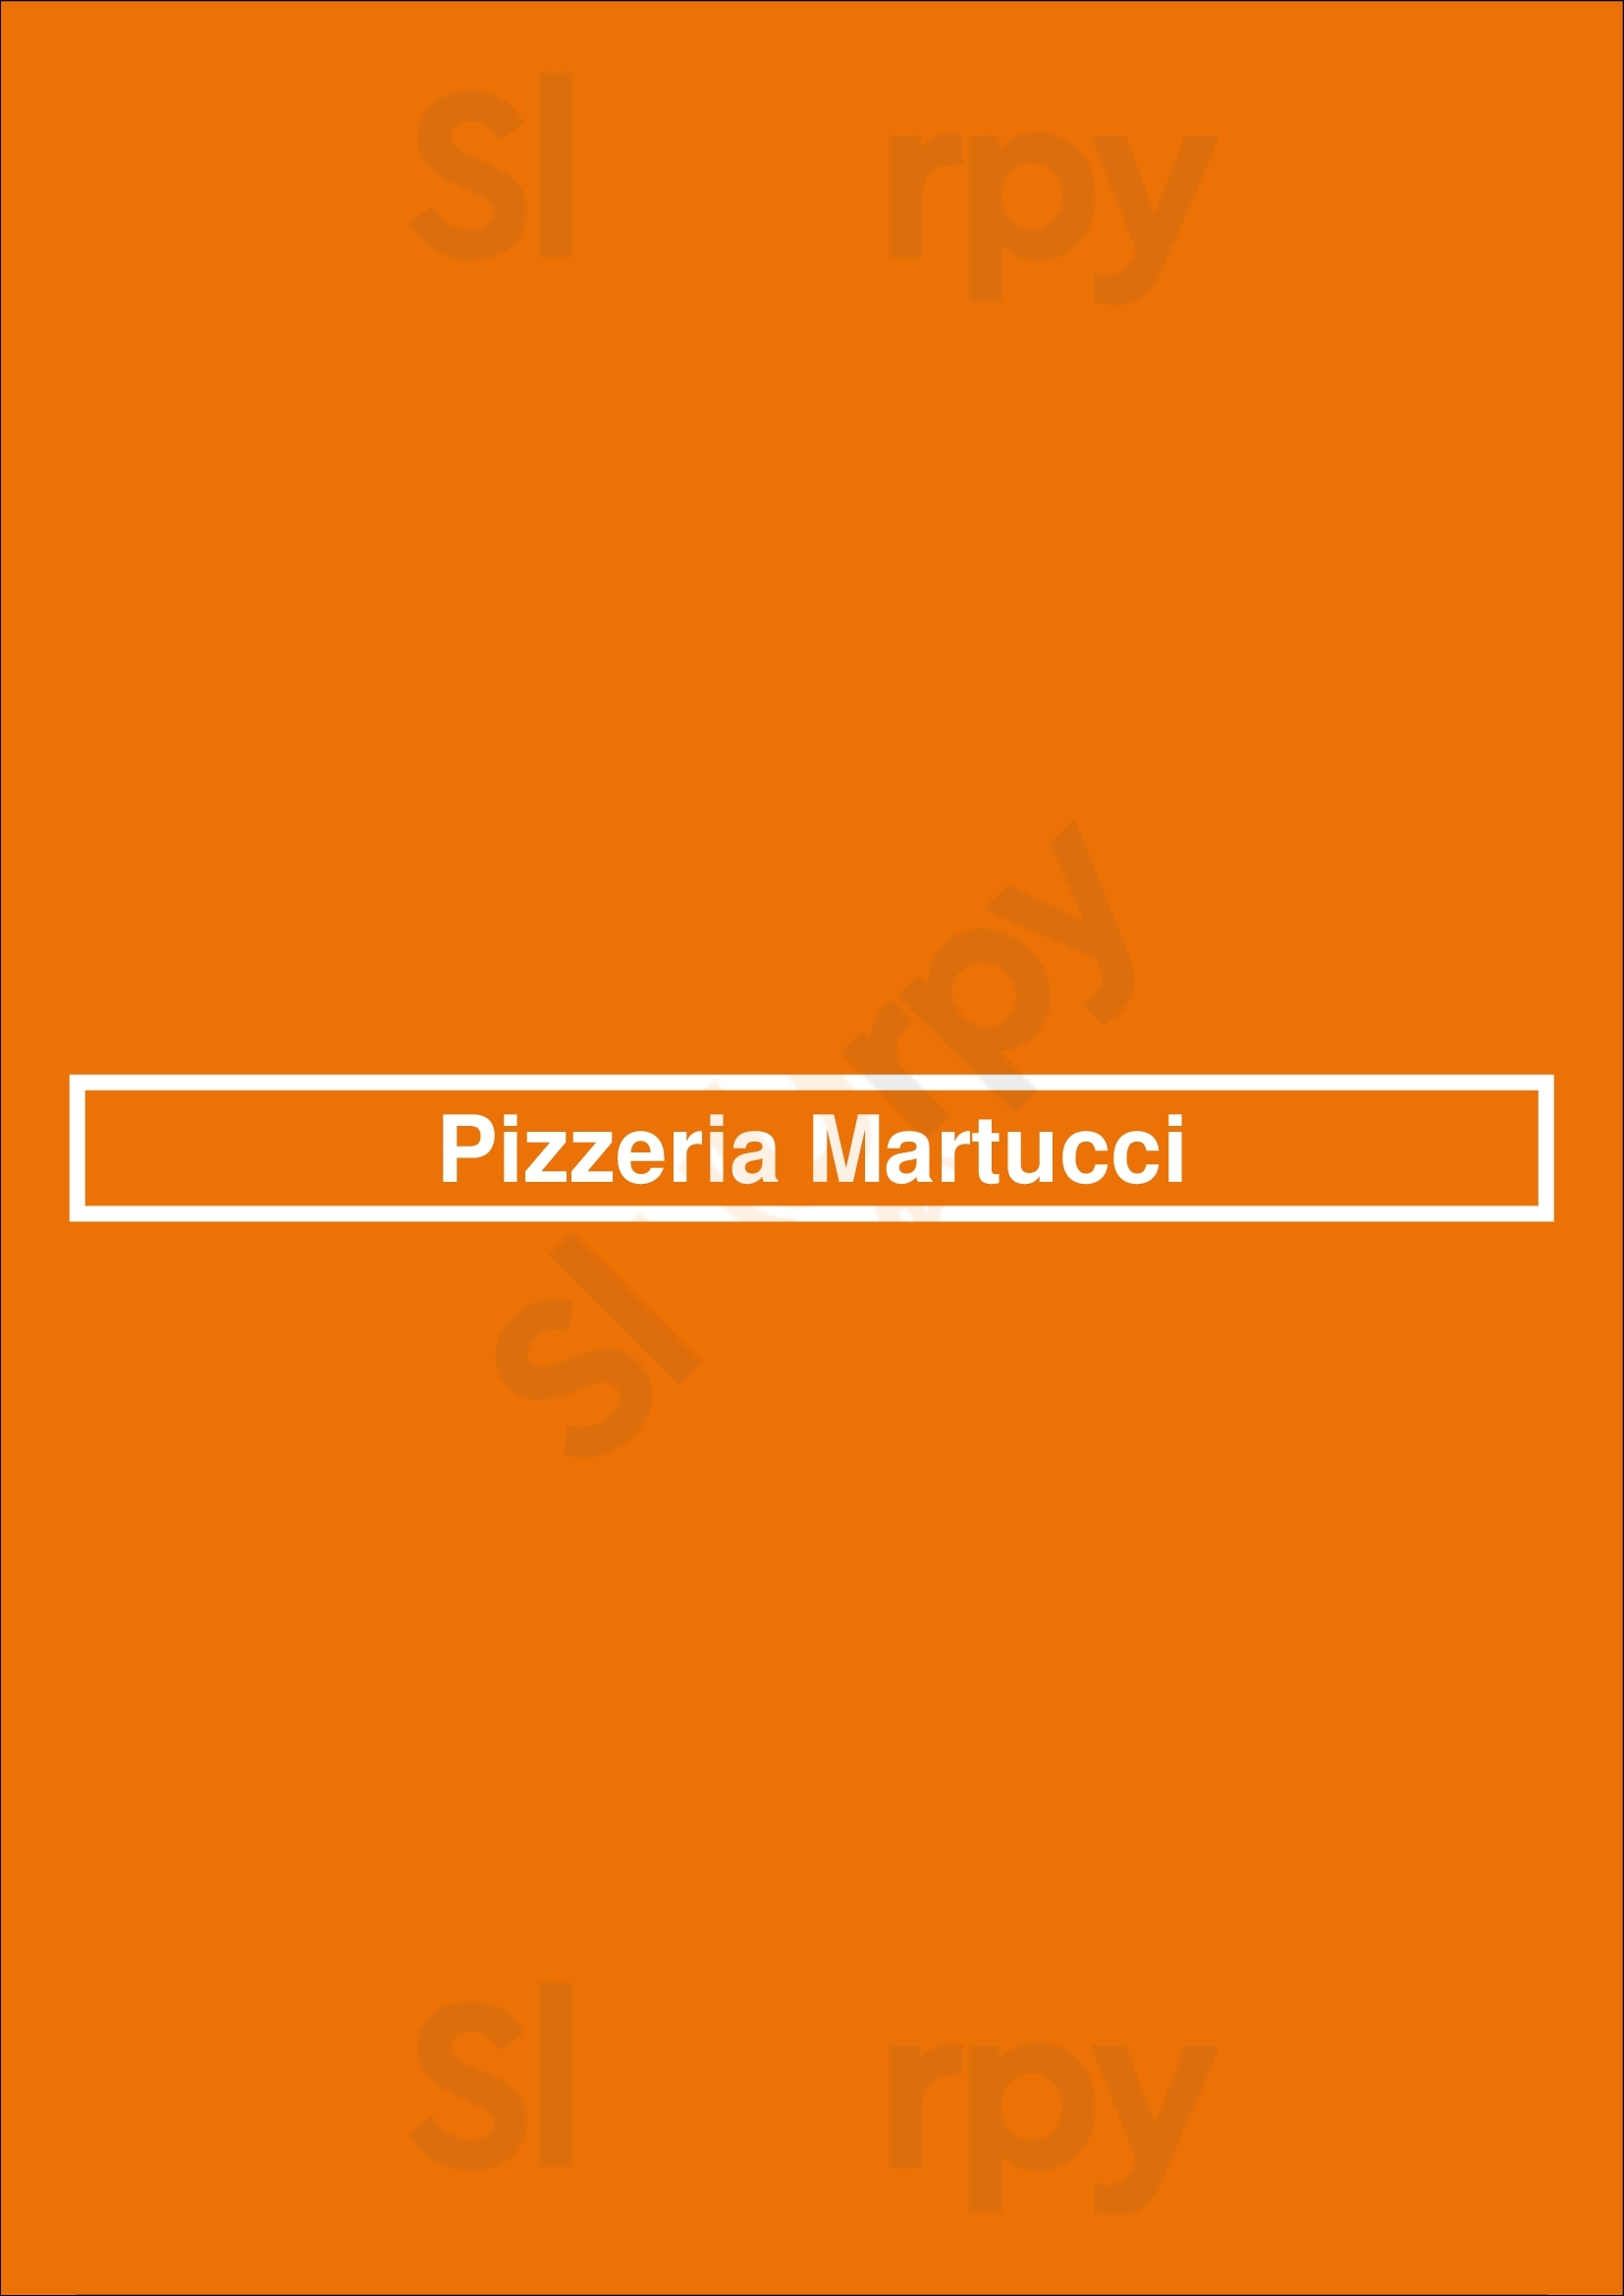 Pizzeria Martucci Funchal Menu - 1